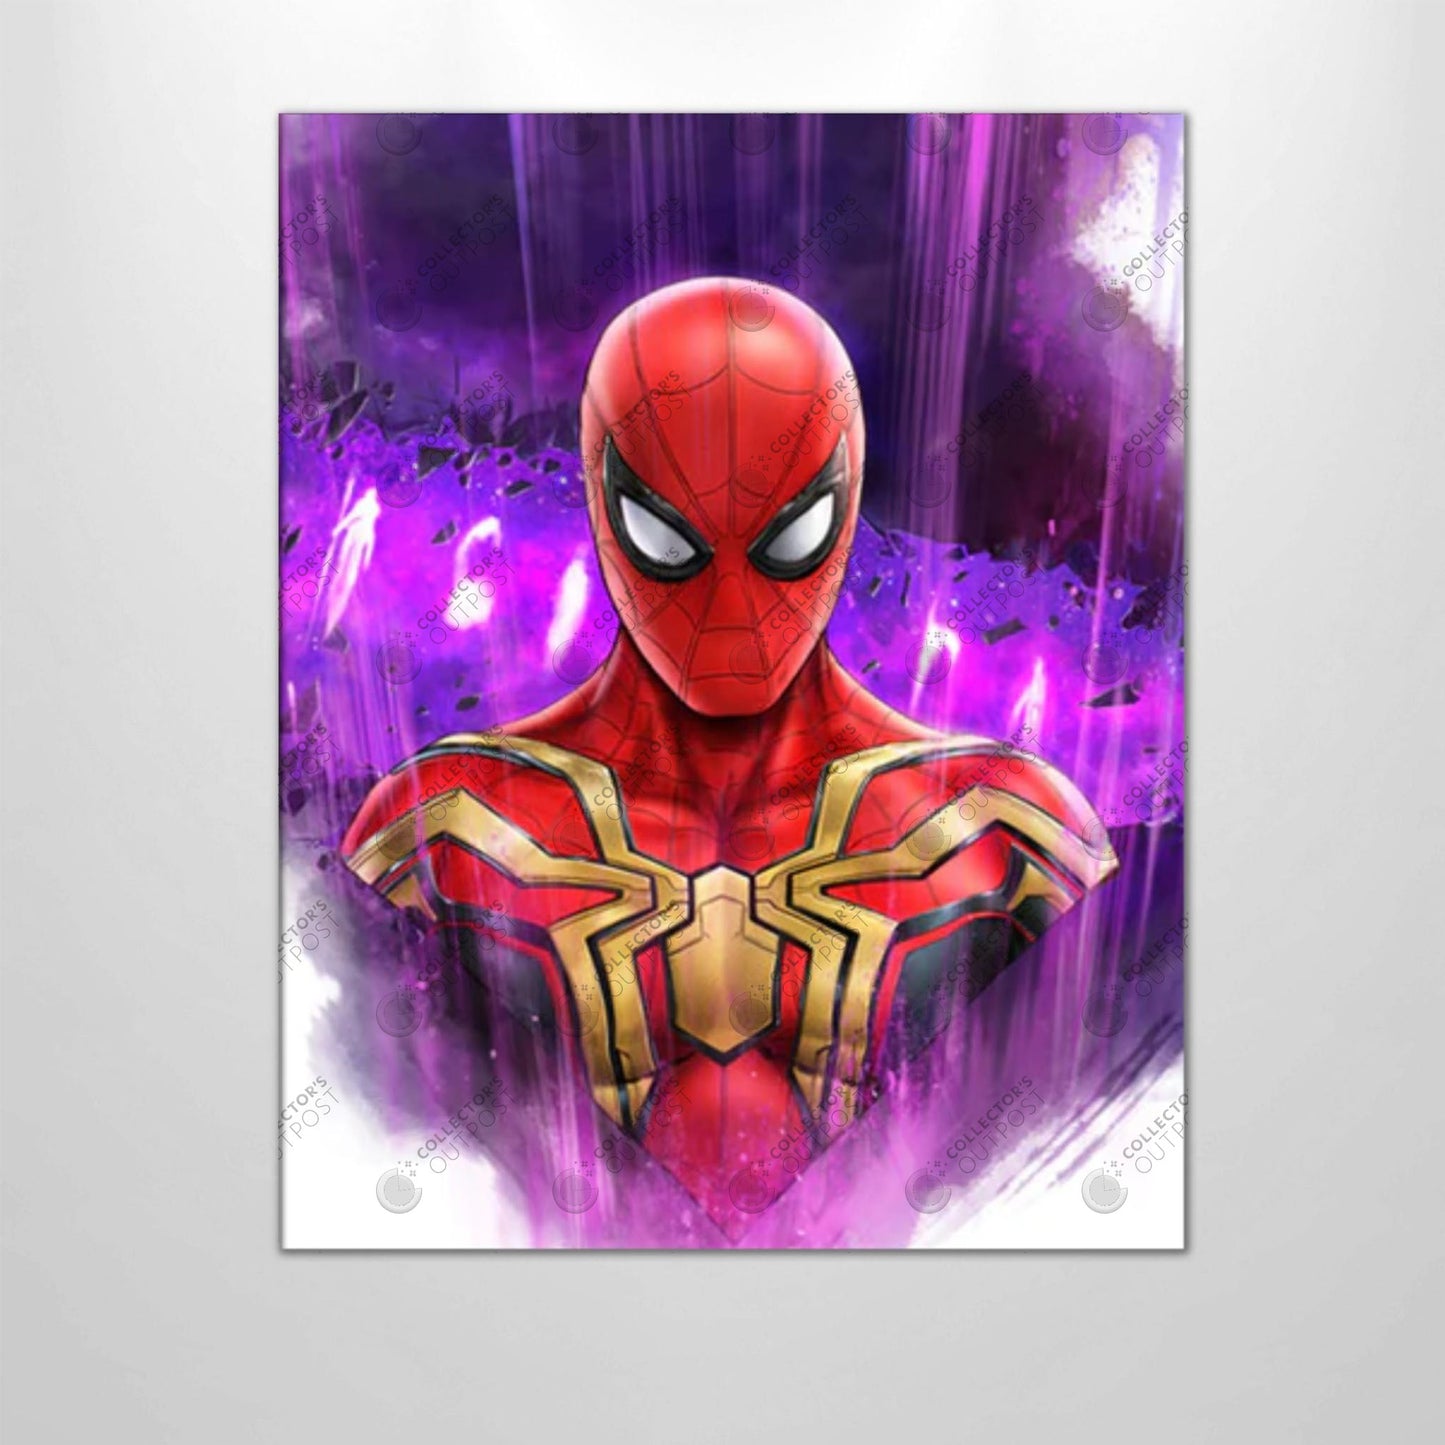 The Iron Spider (Marvel) Spider-Man Legacy Portrait Art Print